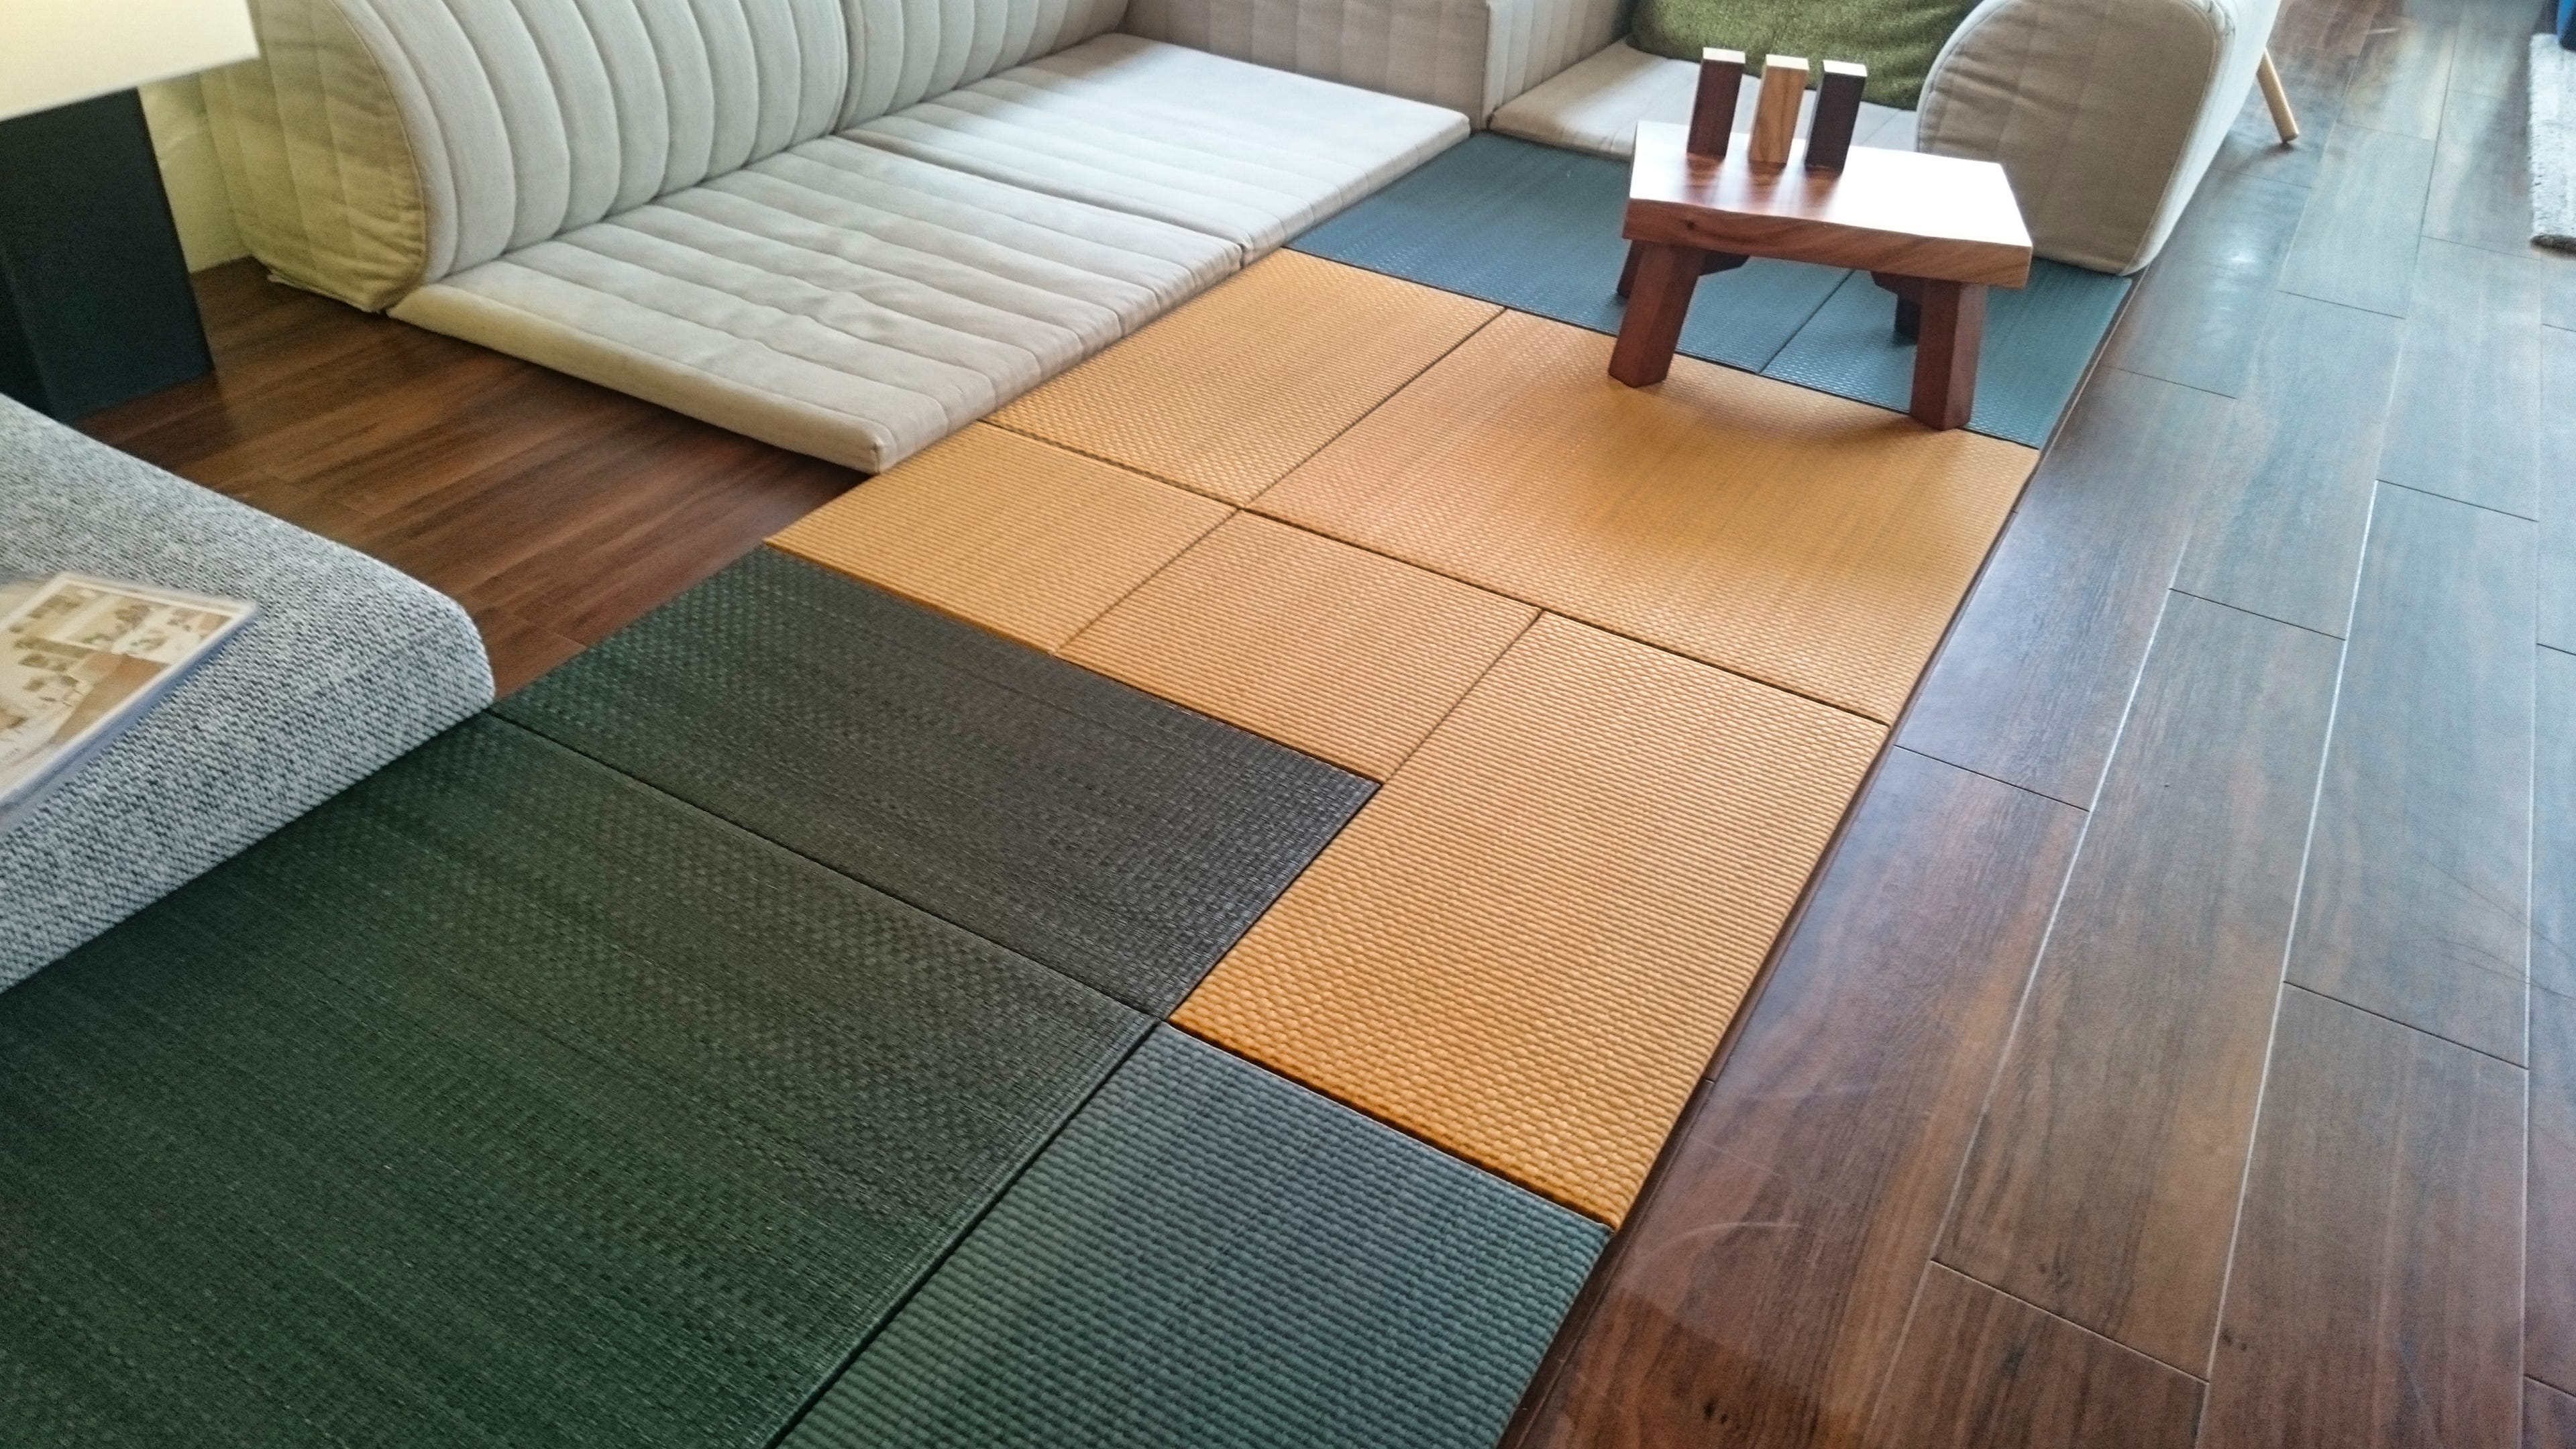 Introducing The Tatami Yoga Mat Ellen Freeman Medium